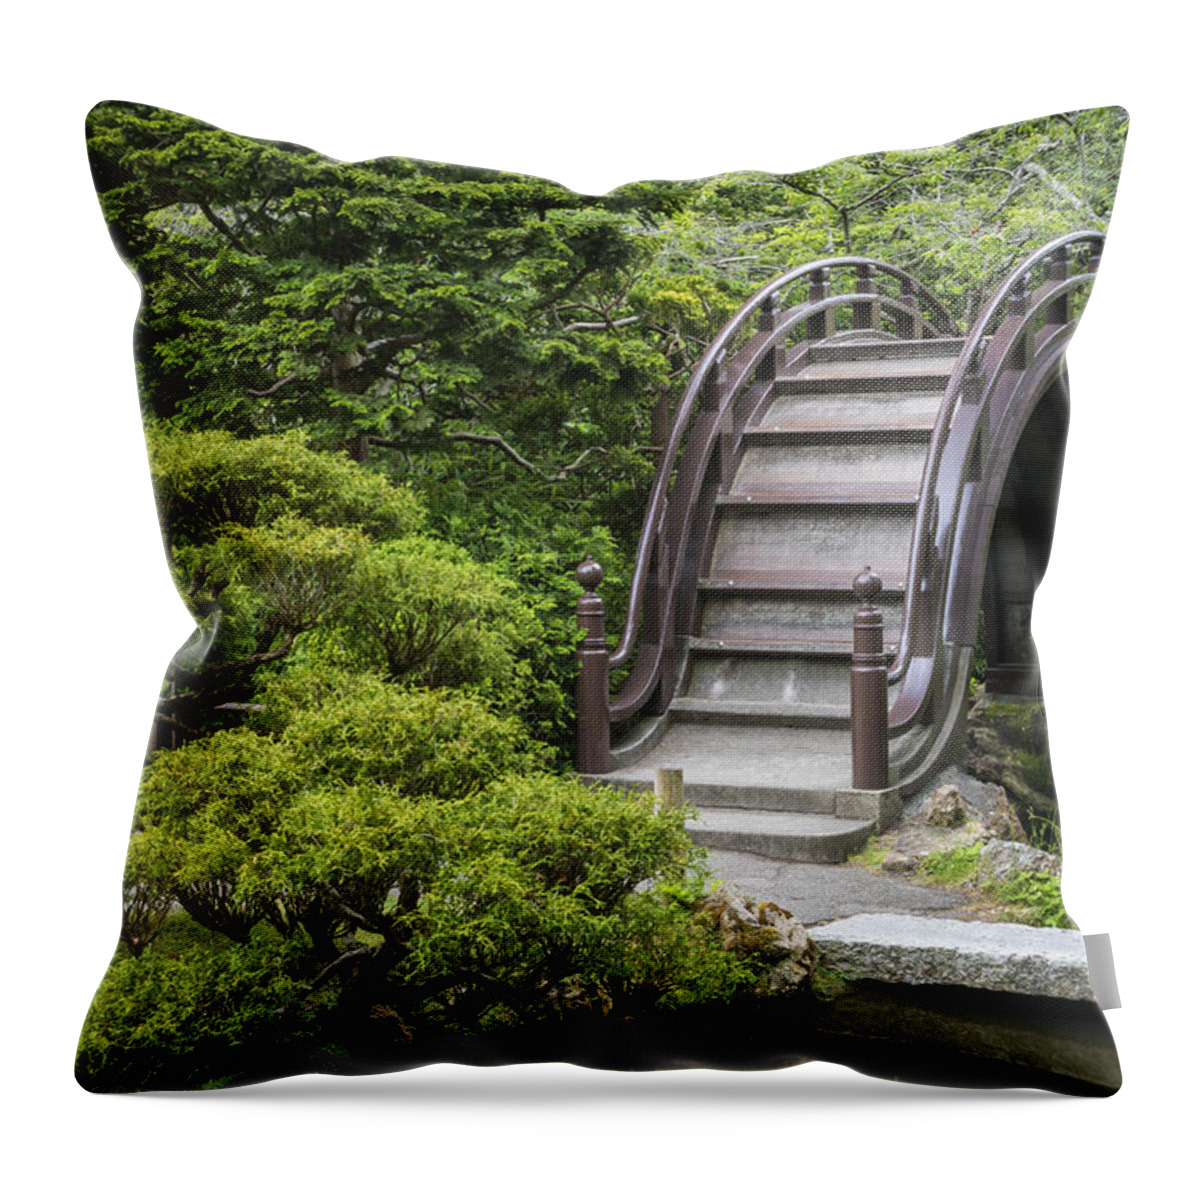 3scape Throw Pillow featuring the photograph Moon Bridge - Japanese Tea Garden by Adam Romanowicz